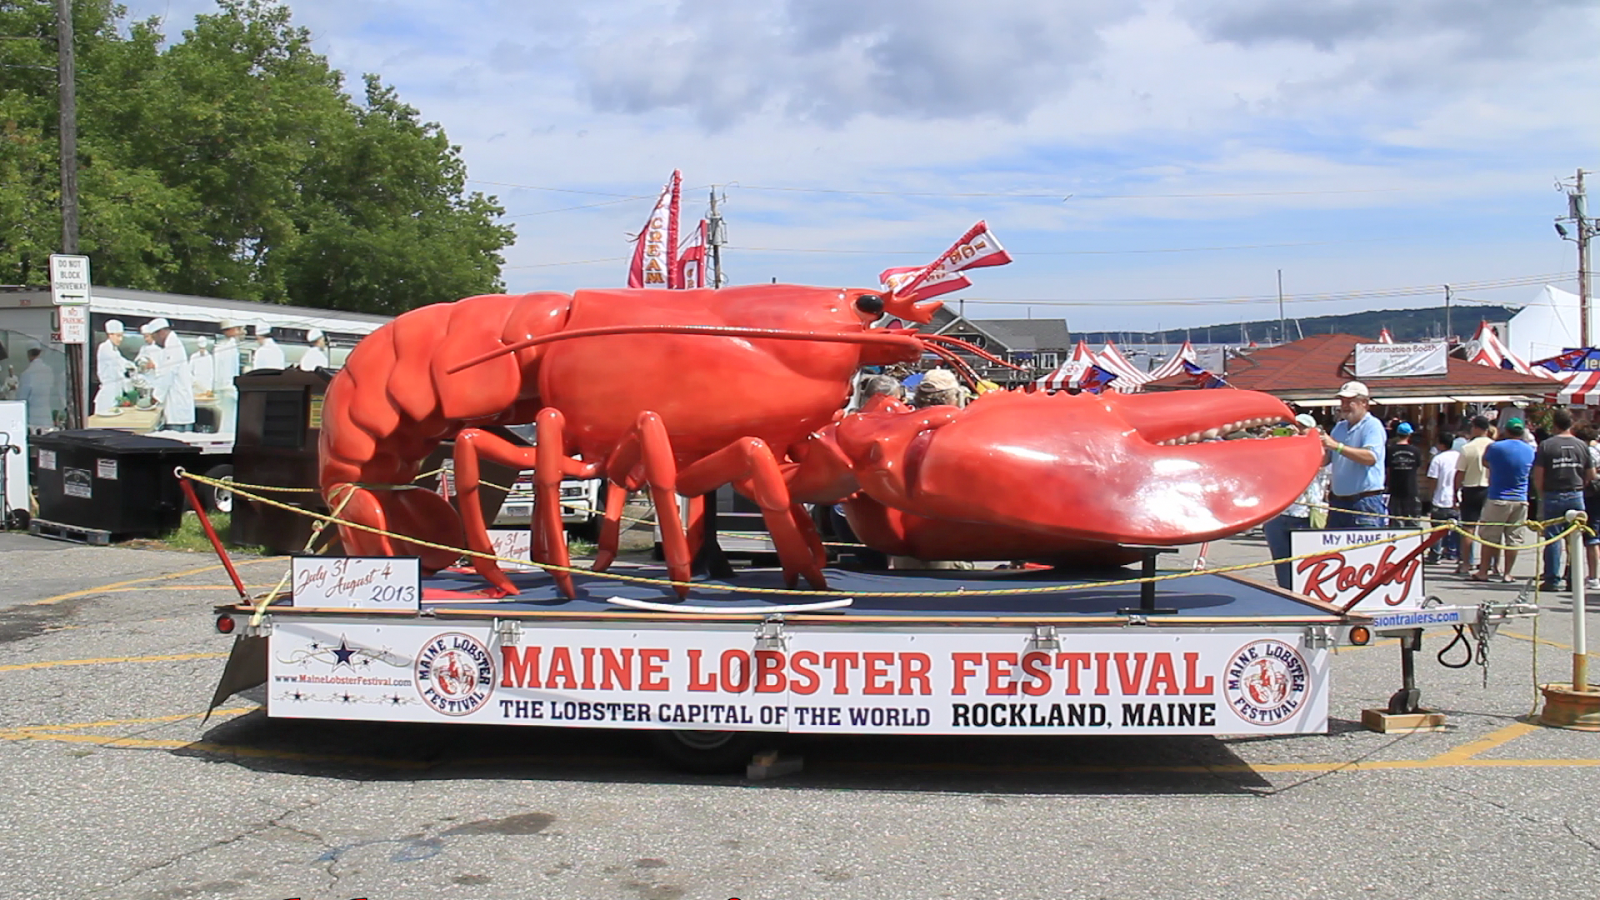 RCN America Maine 66th Maine Lobster Festival